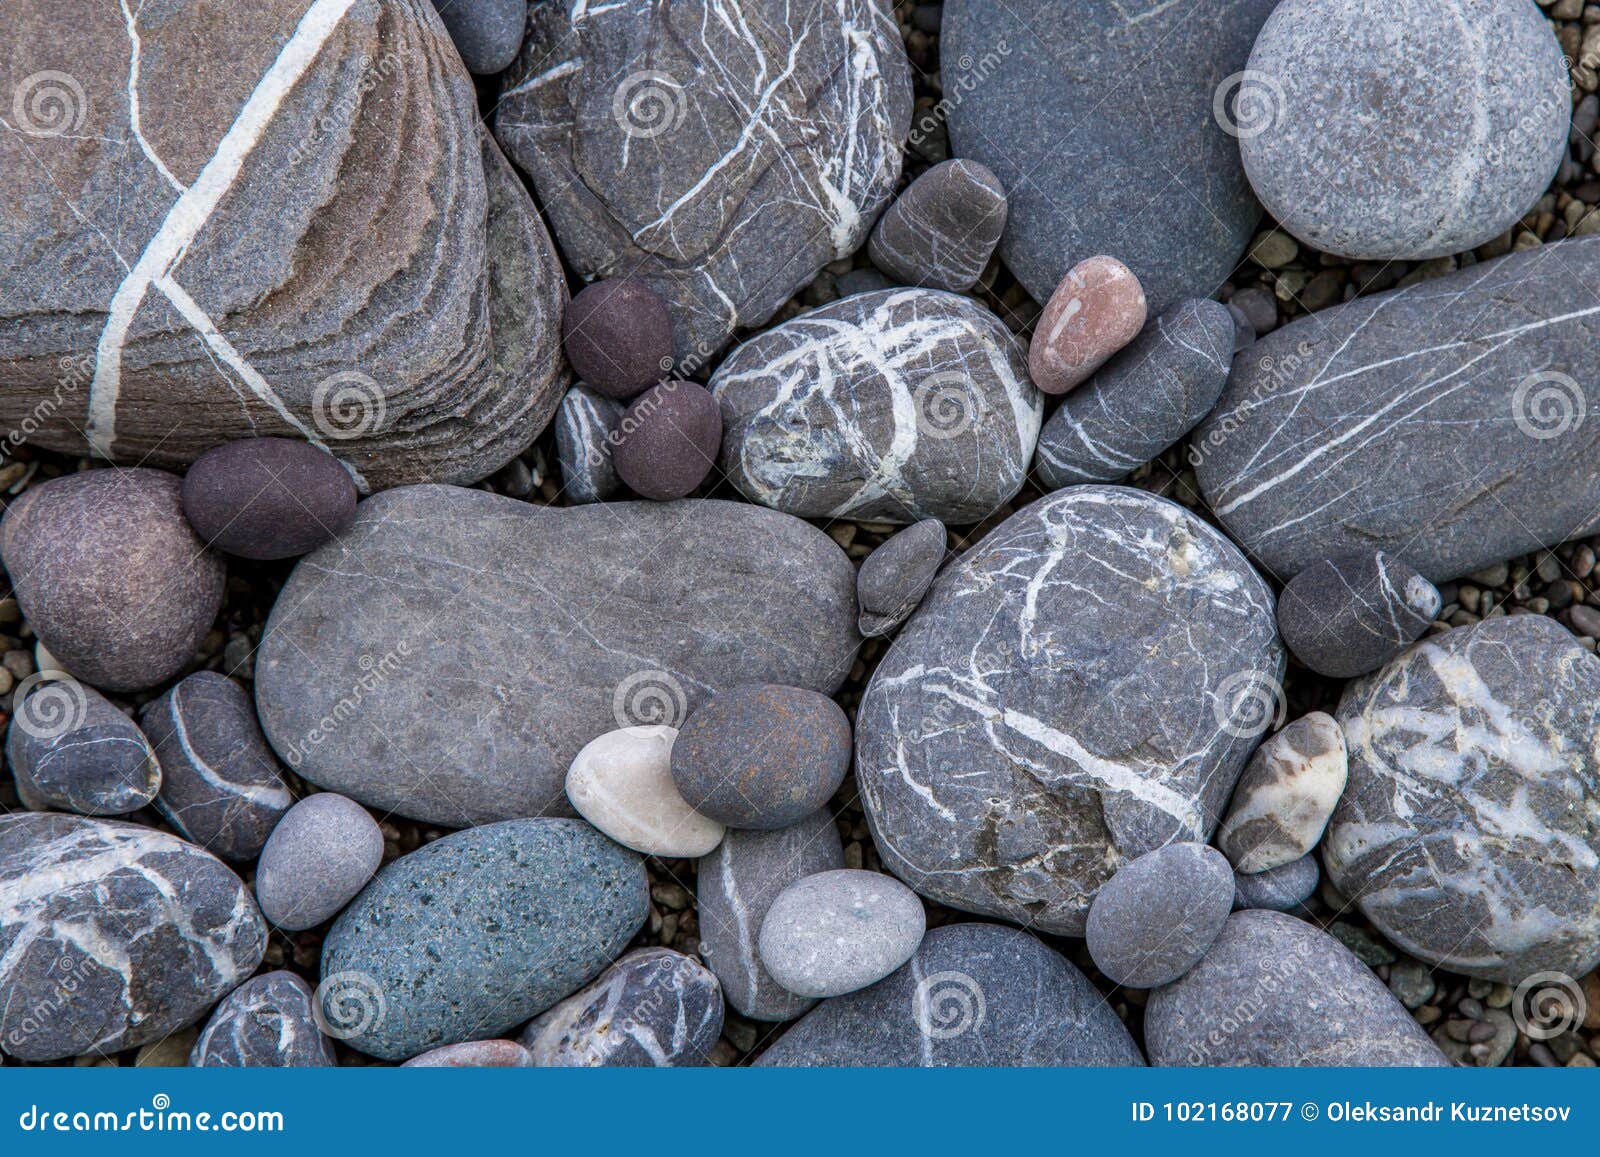 shingle shore closeup clean beach rocks crimea 102168077